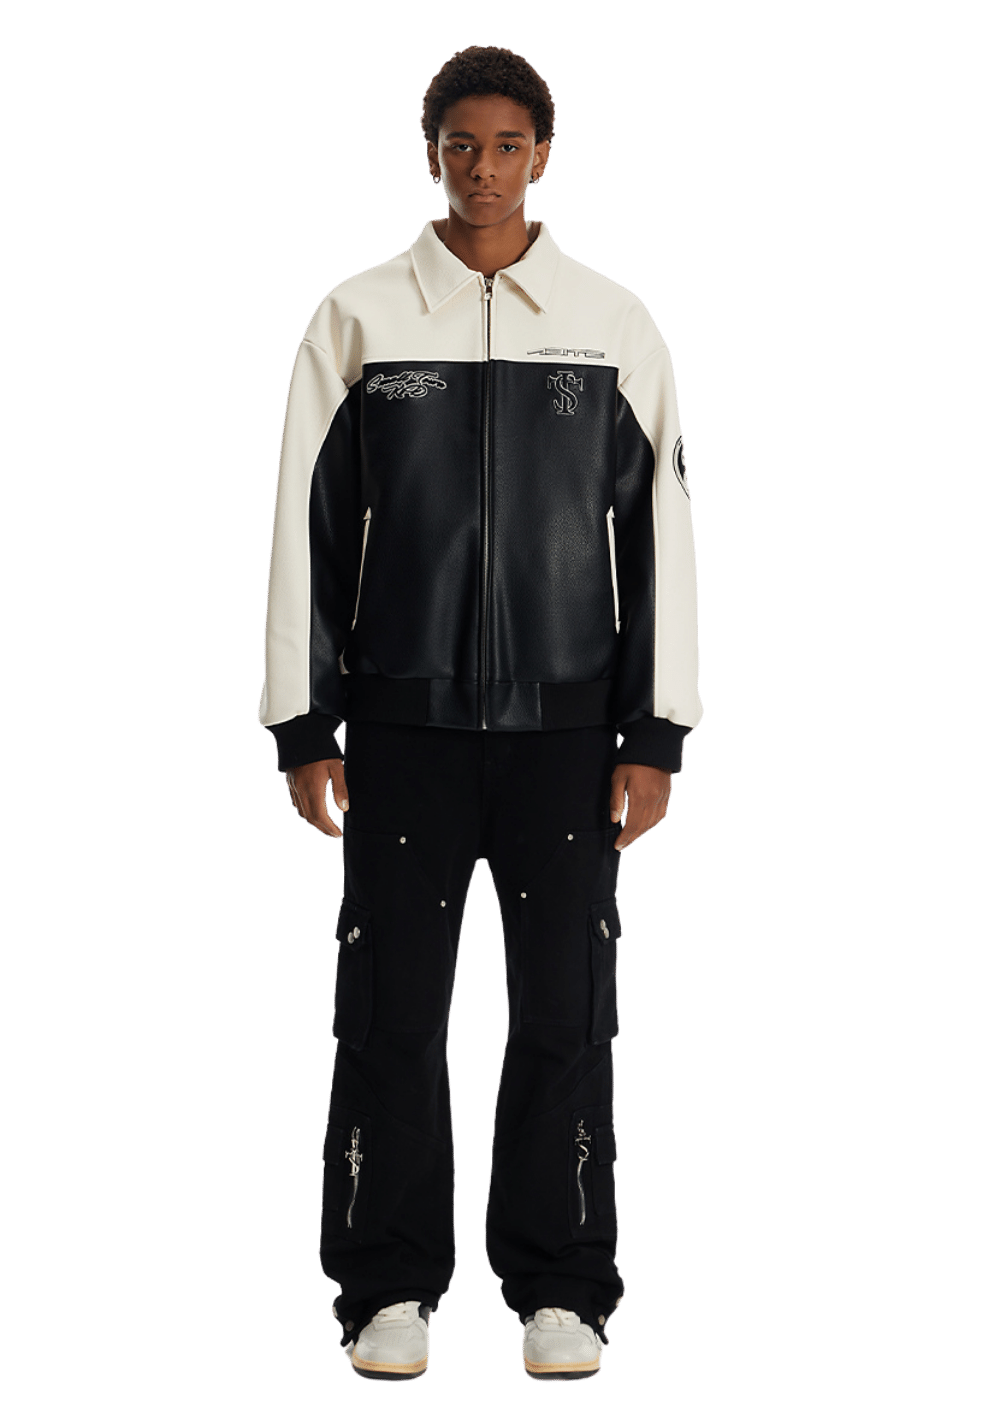 BITE Leather Jacket - PSYLOS 1, BITE Leather Jacket, Jacket, Small Town Kid, PSYLOS 1